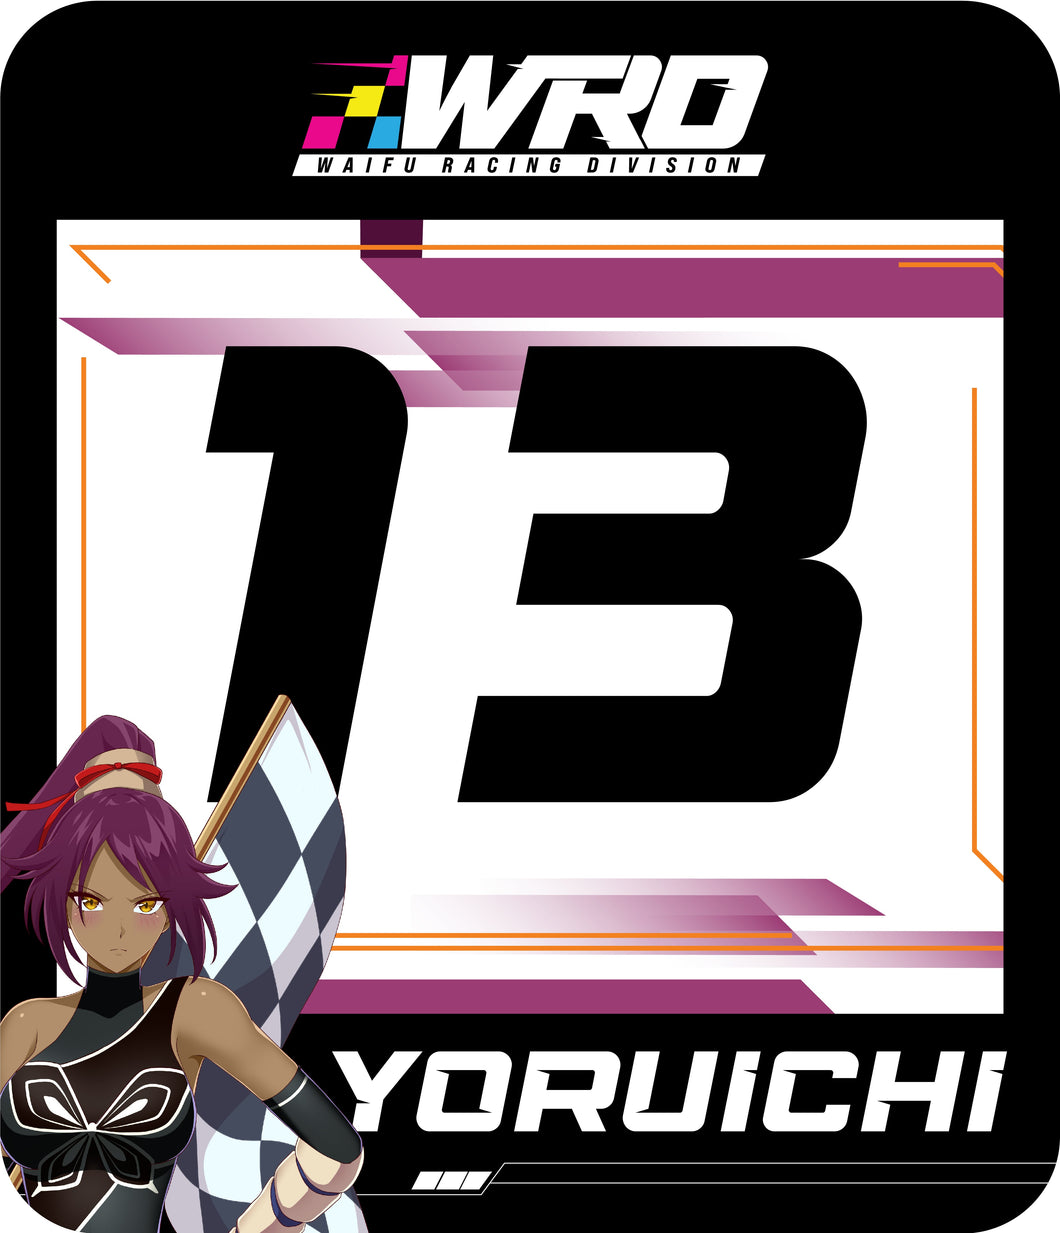 Yoruichi Track Number (Set)